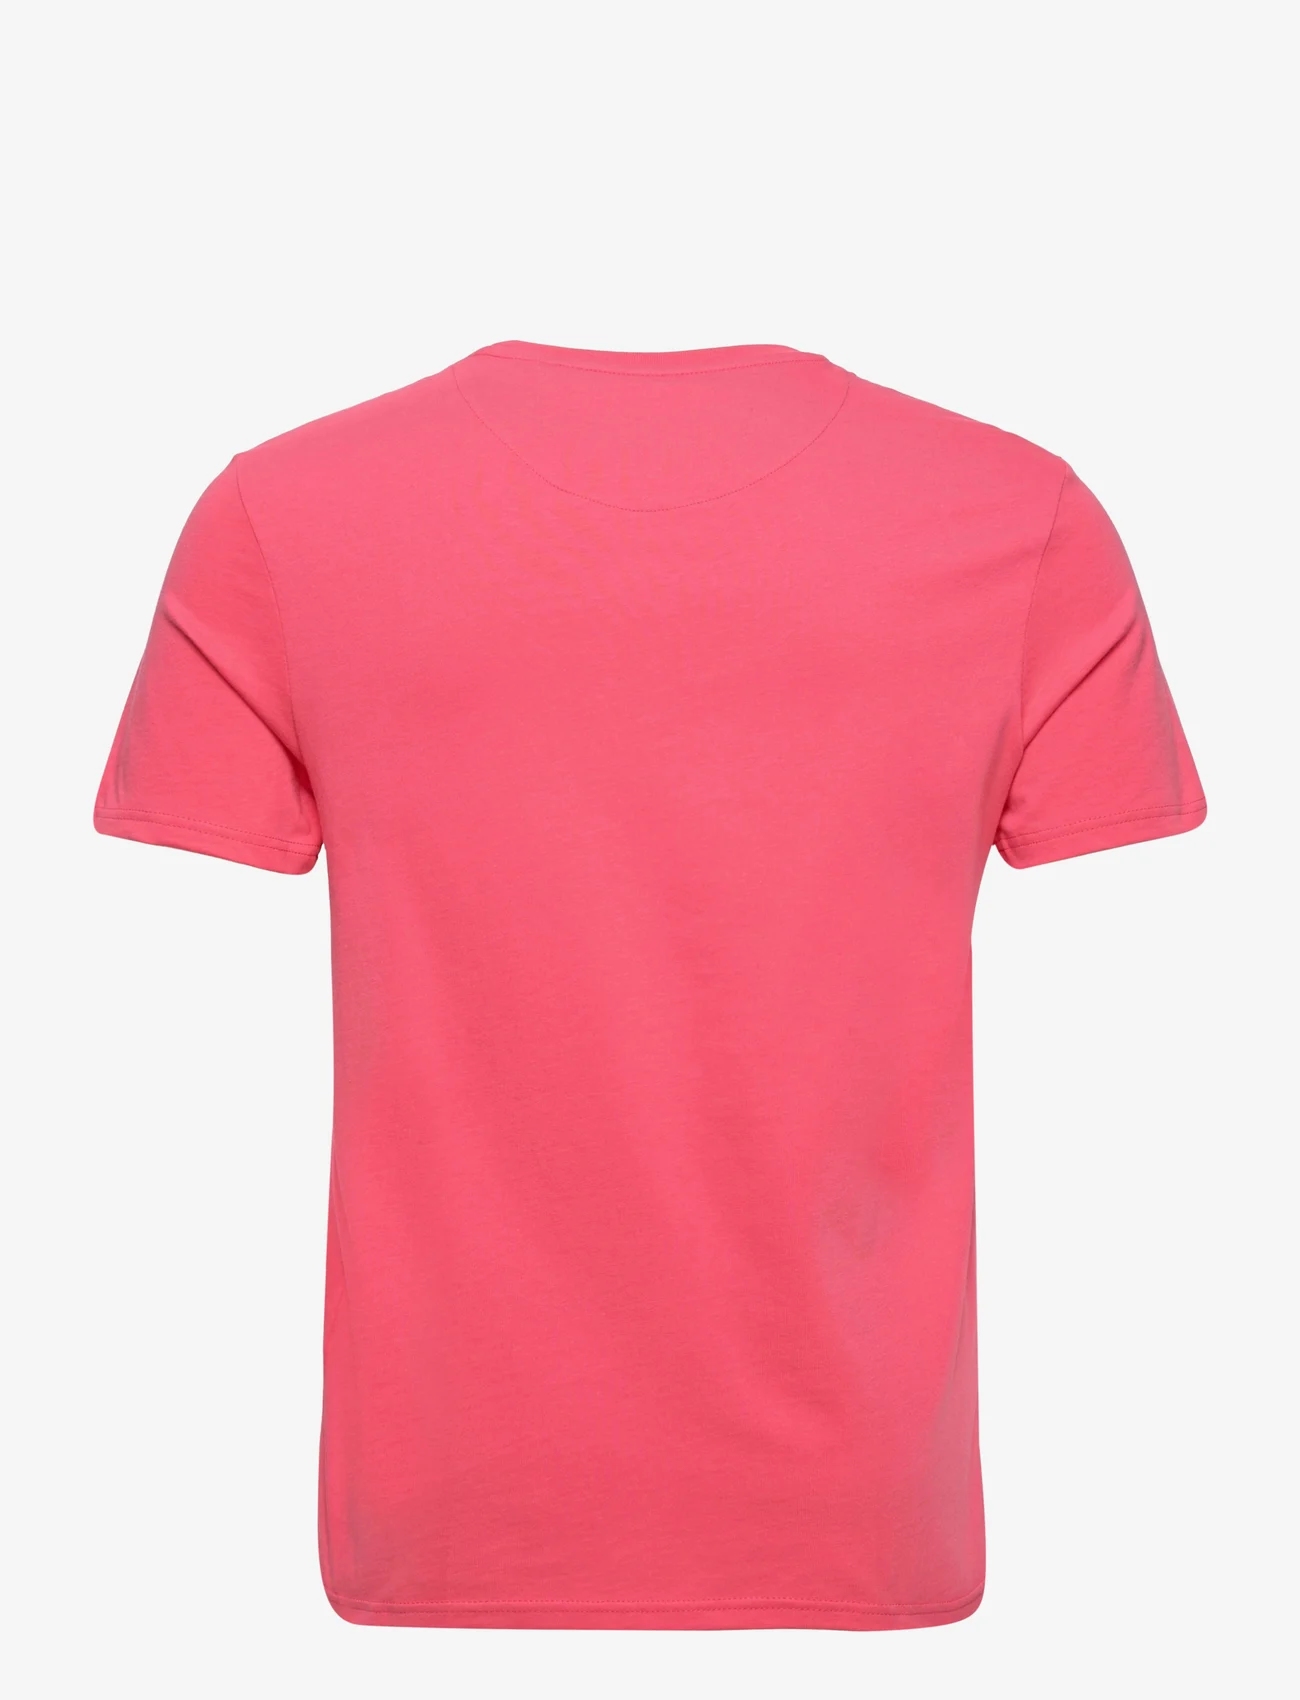 Lyle & Scott - Plain T-Shirt - lägsta priserna - electric pink - 1